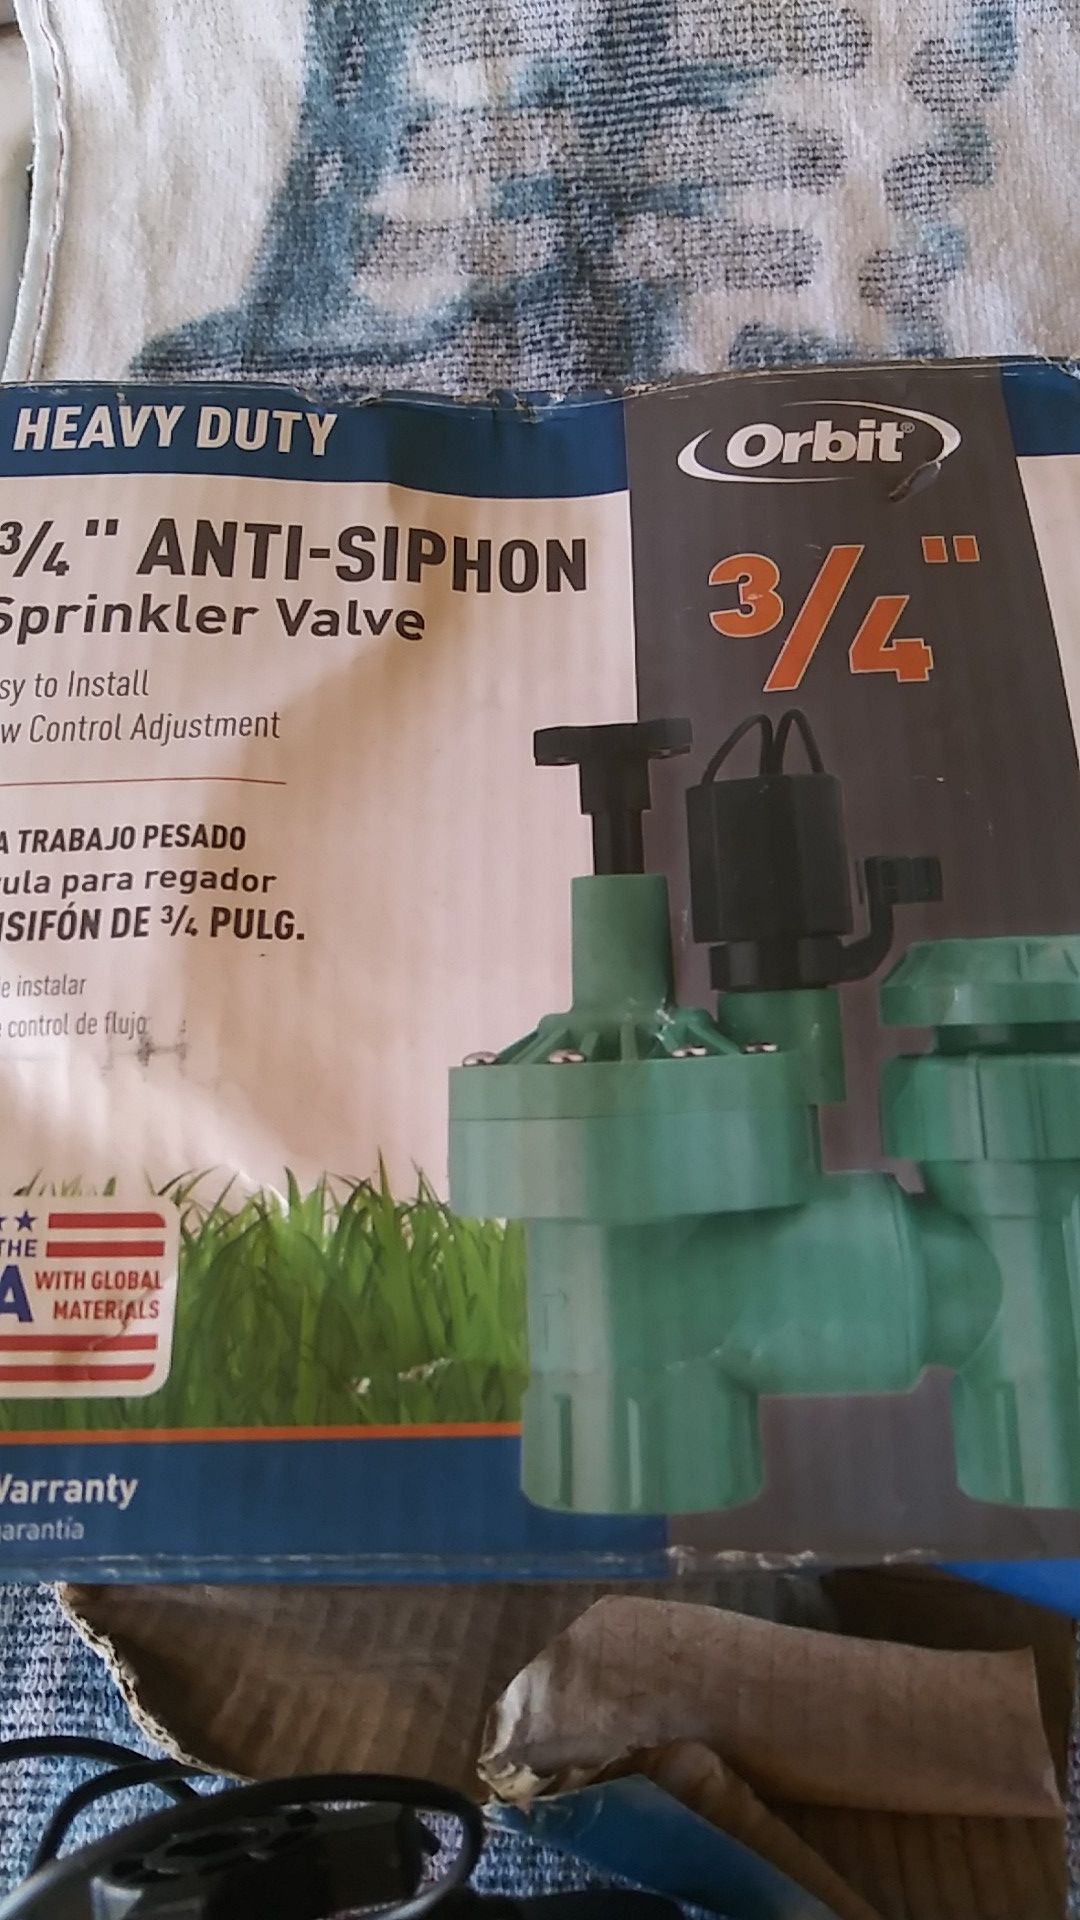 Heavy Duty 3/4" ANTI-SIPHON Sprinkler valve